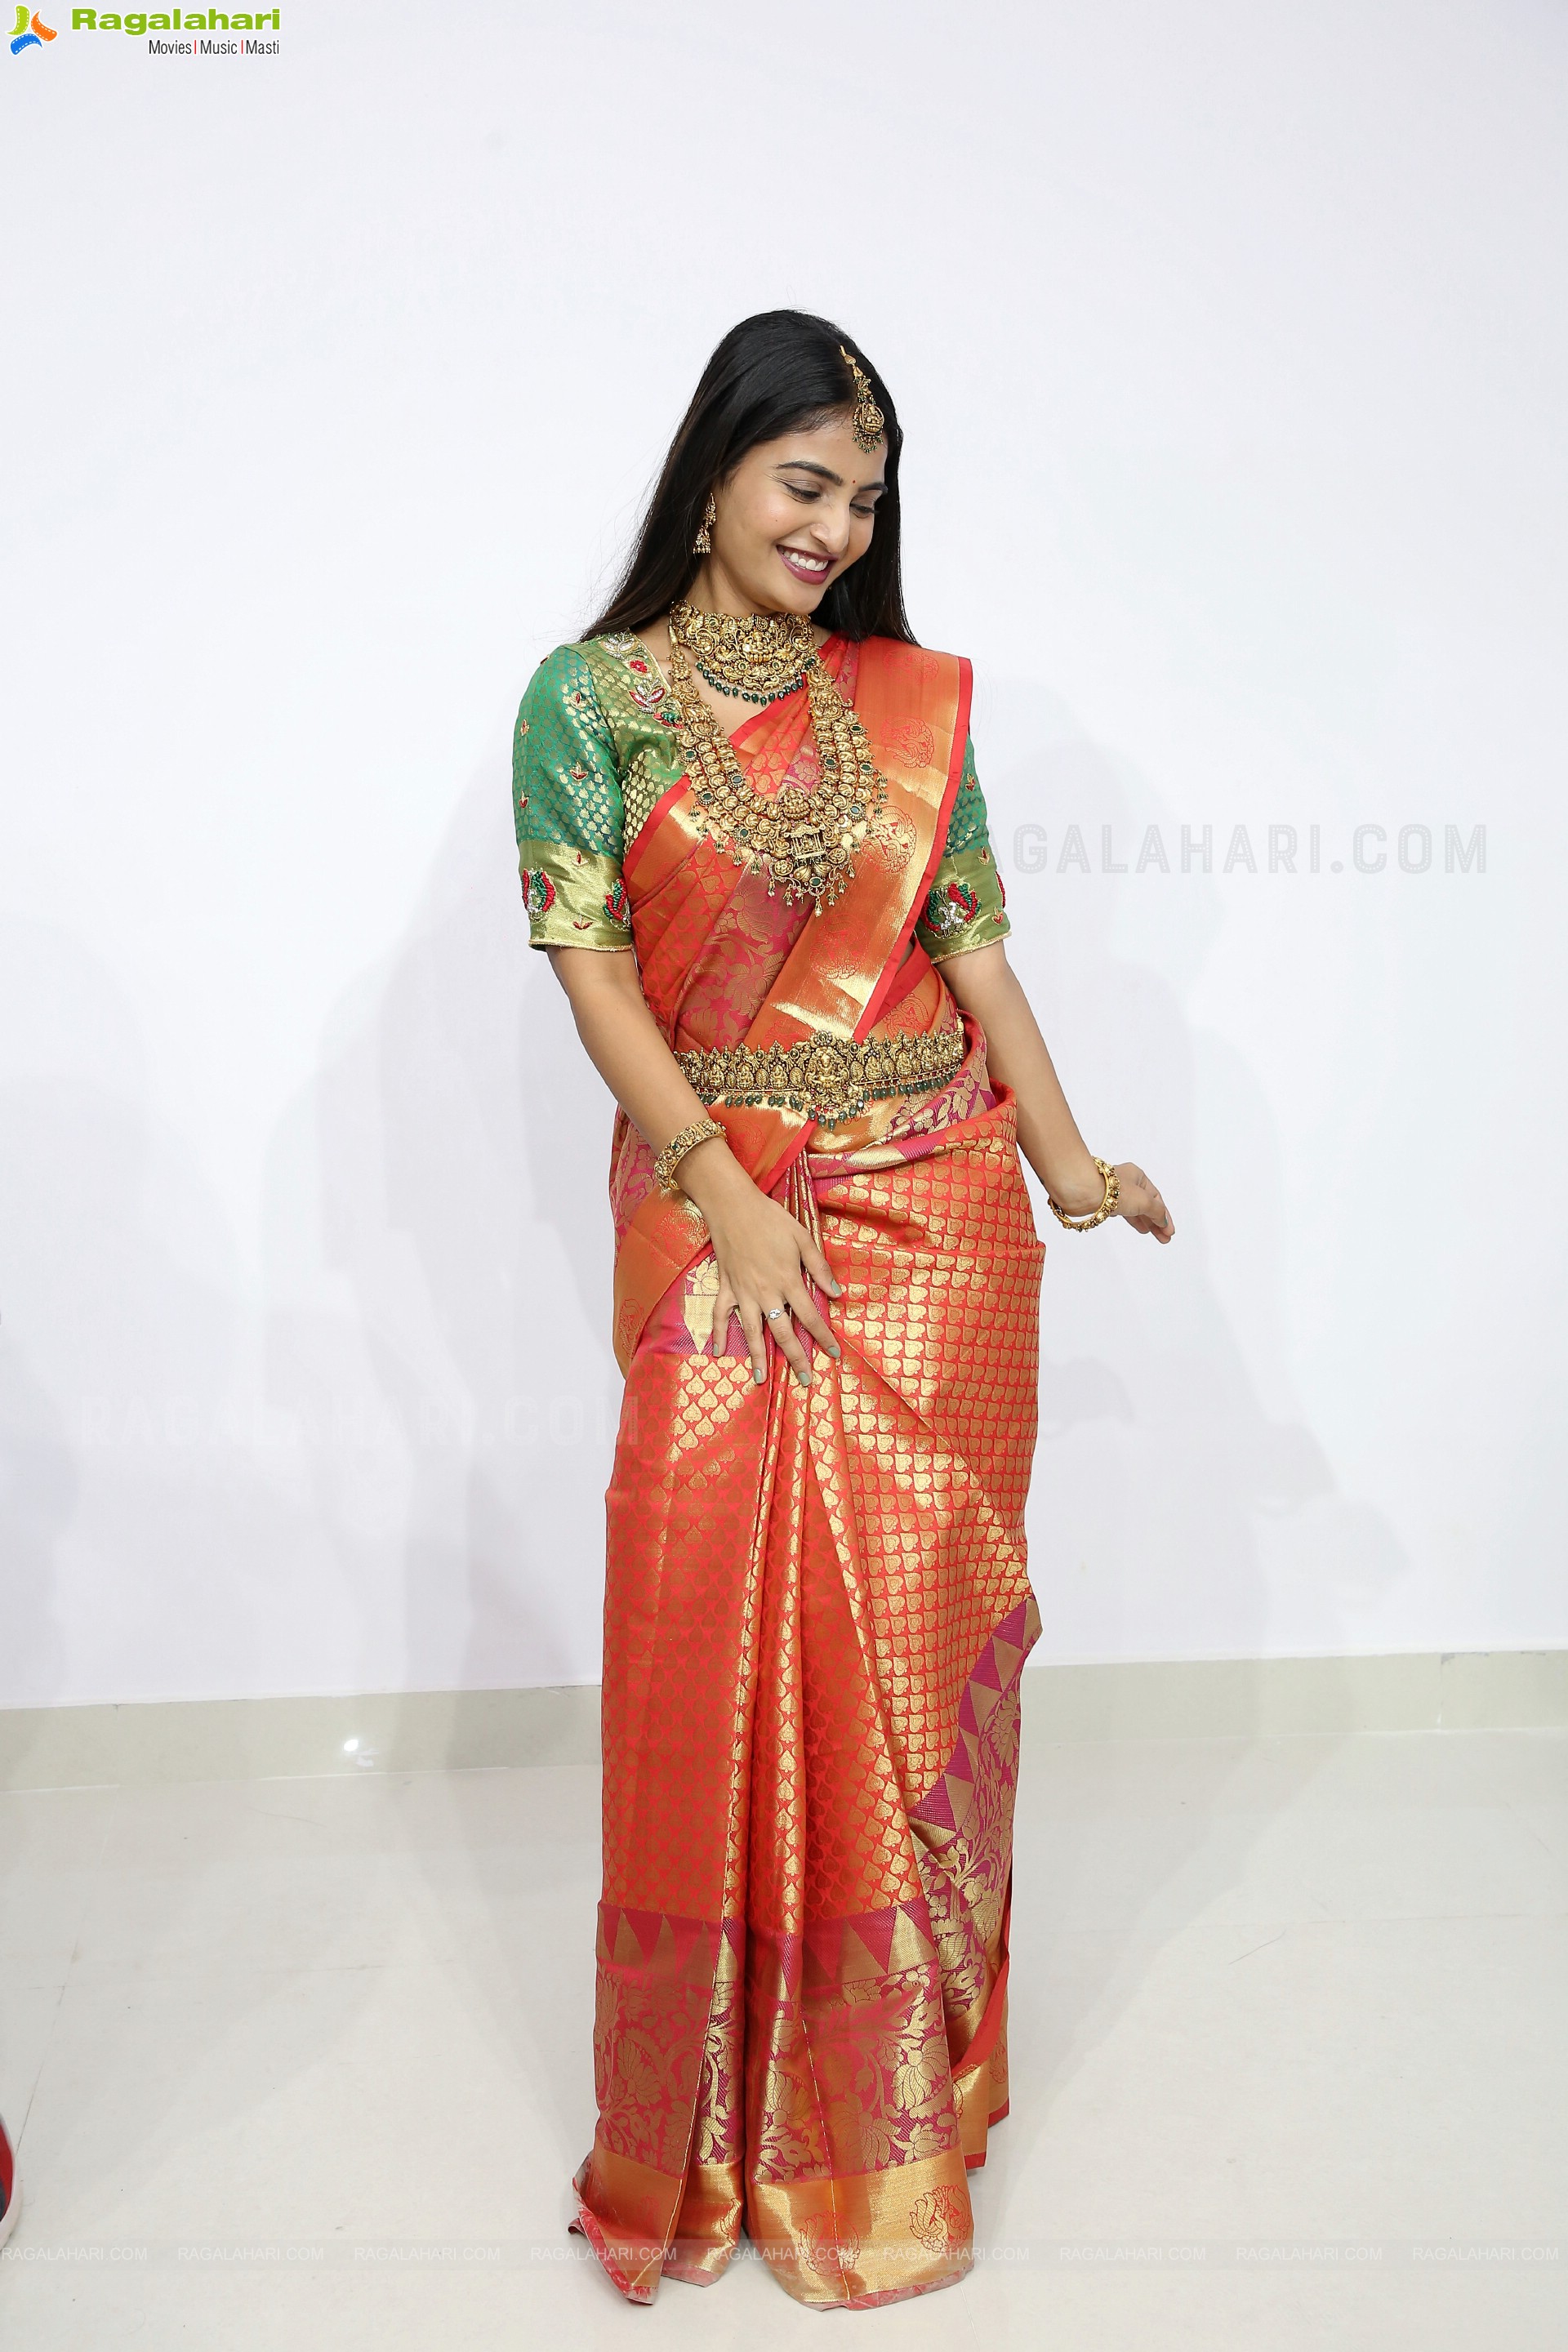 Ananya Nagalla in Traditional Attire, HD Photo Gallery